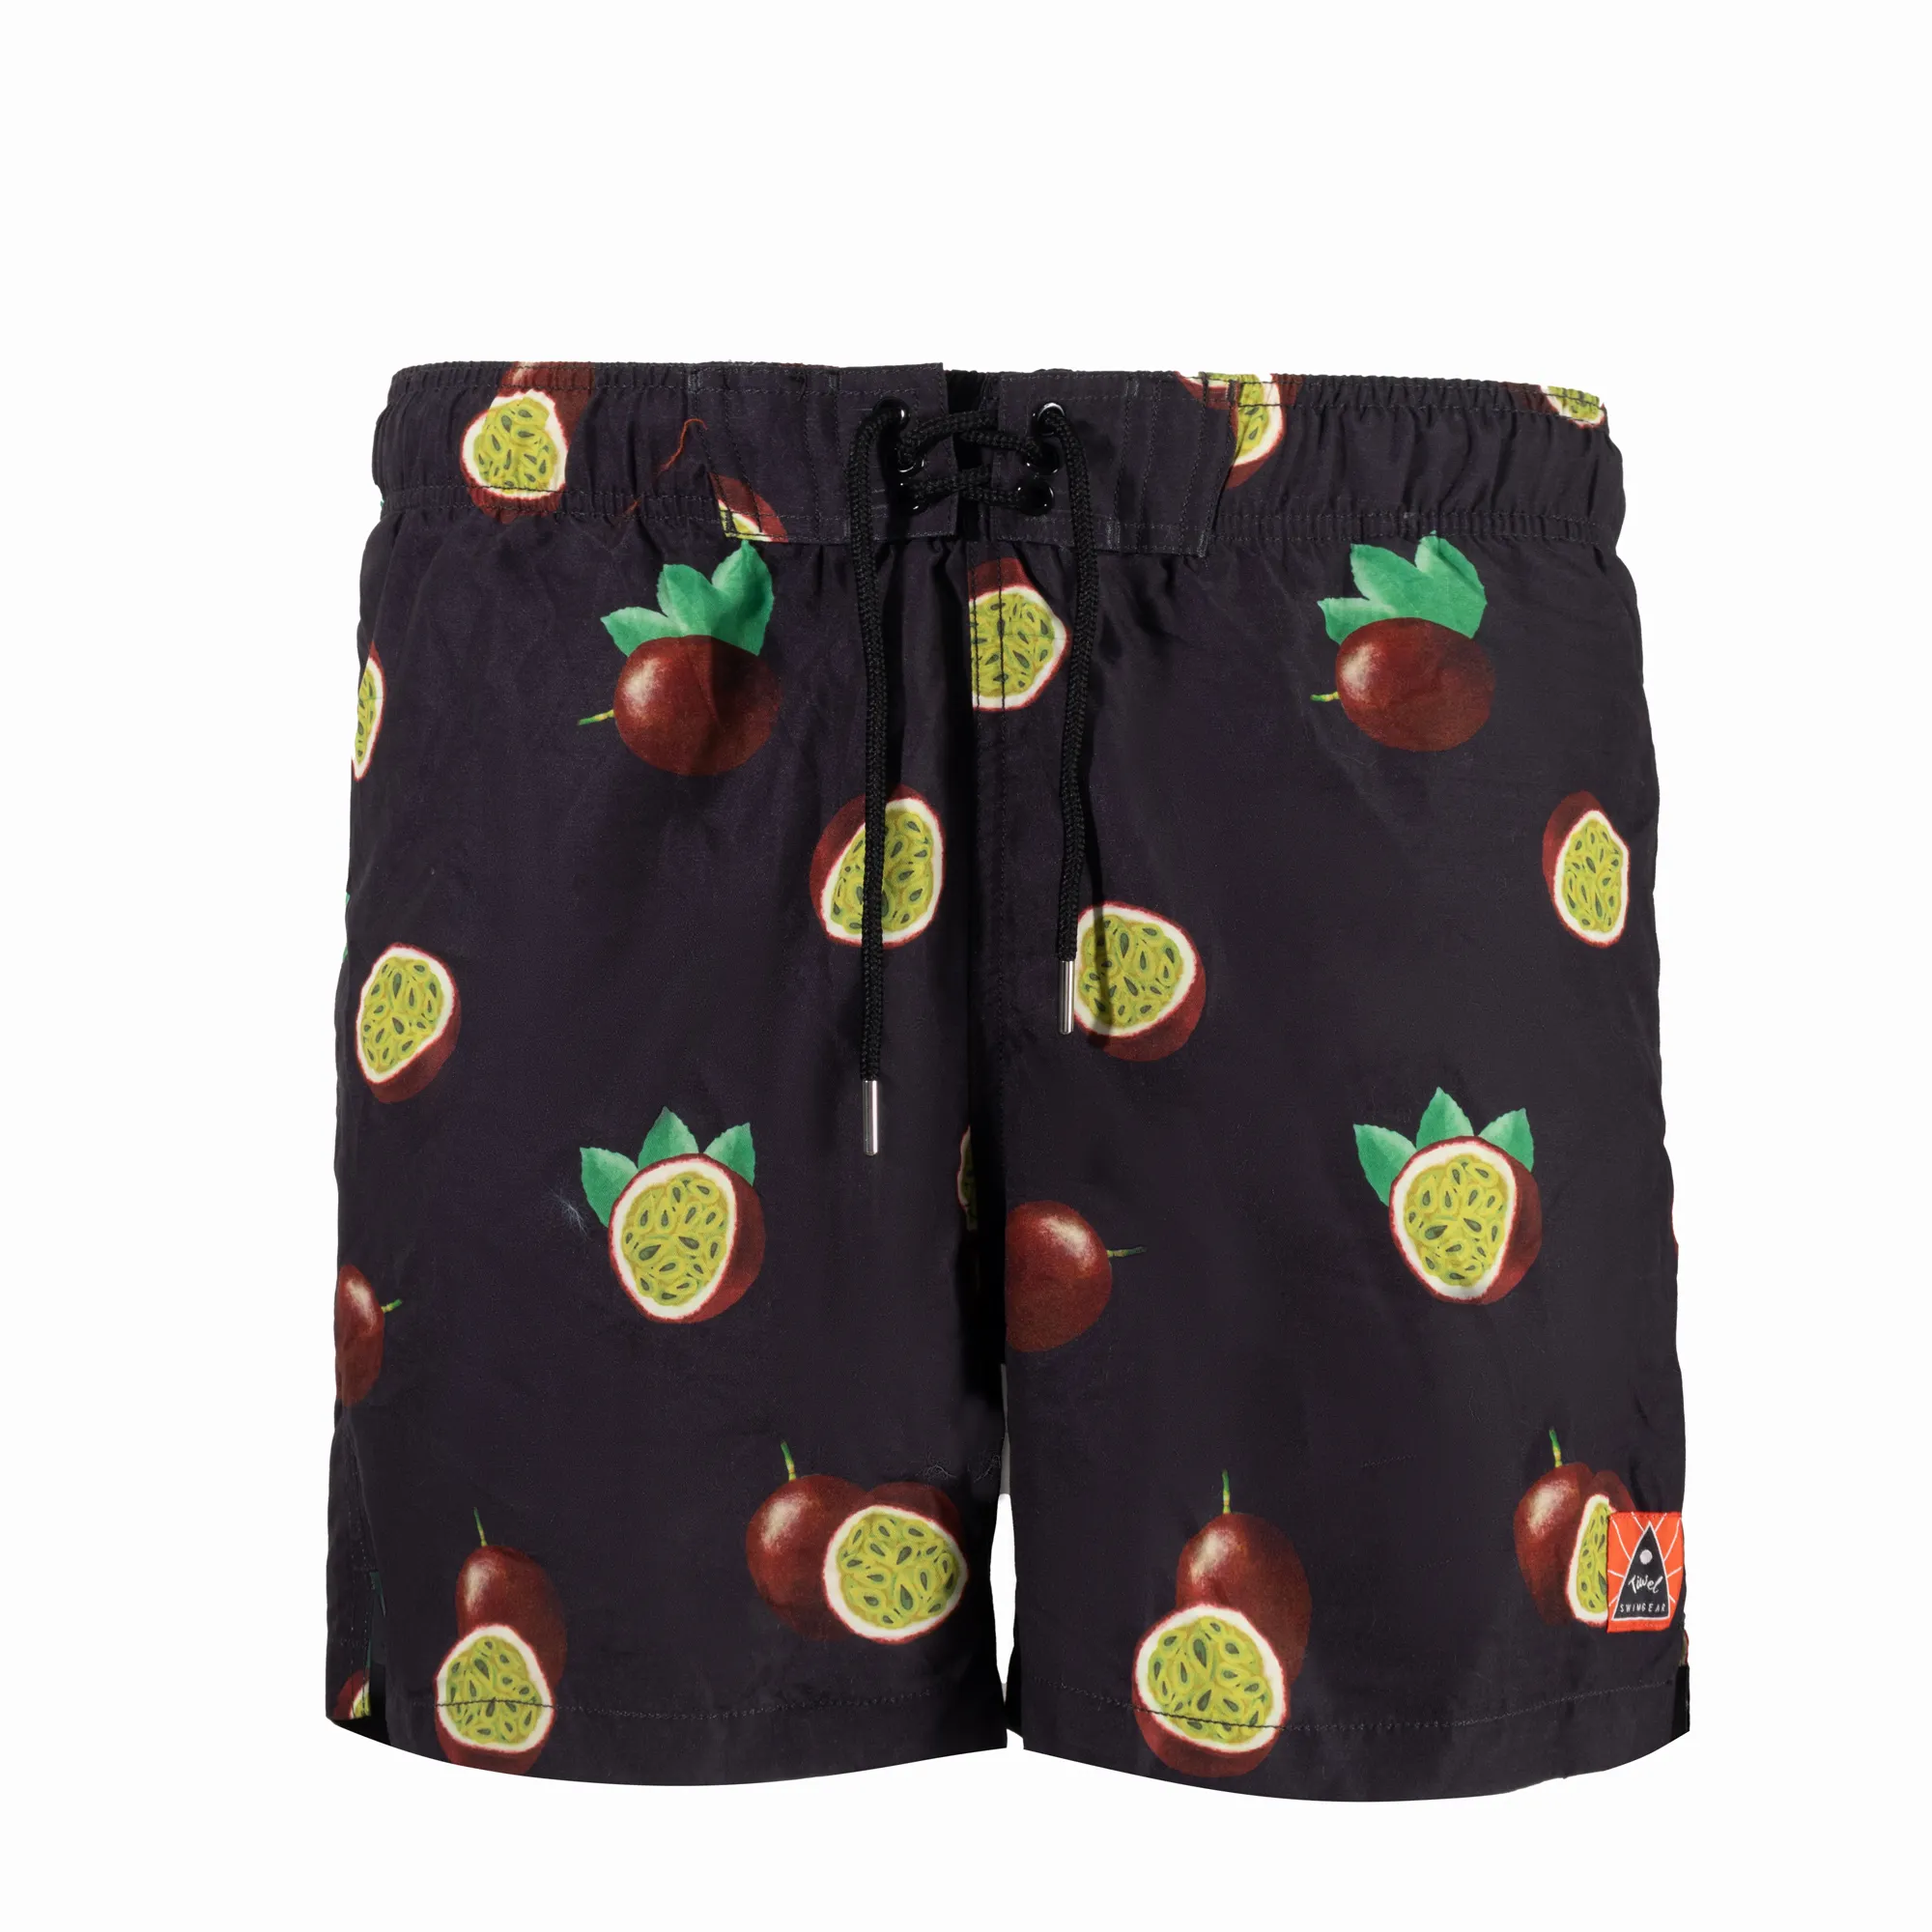 Hot selling men swimming trunks fashion printed Beach Pants mens bikini briefs eco friendly swimwear